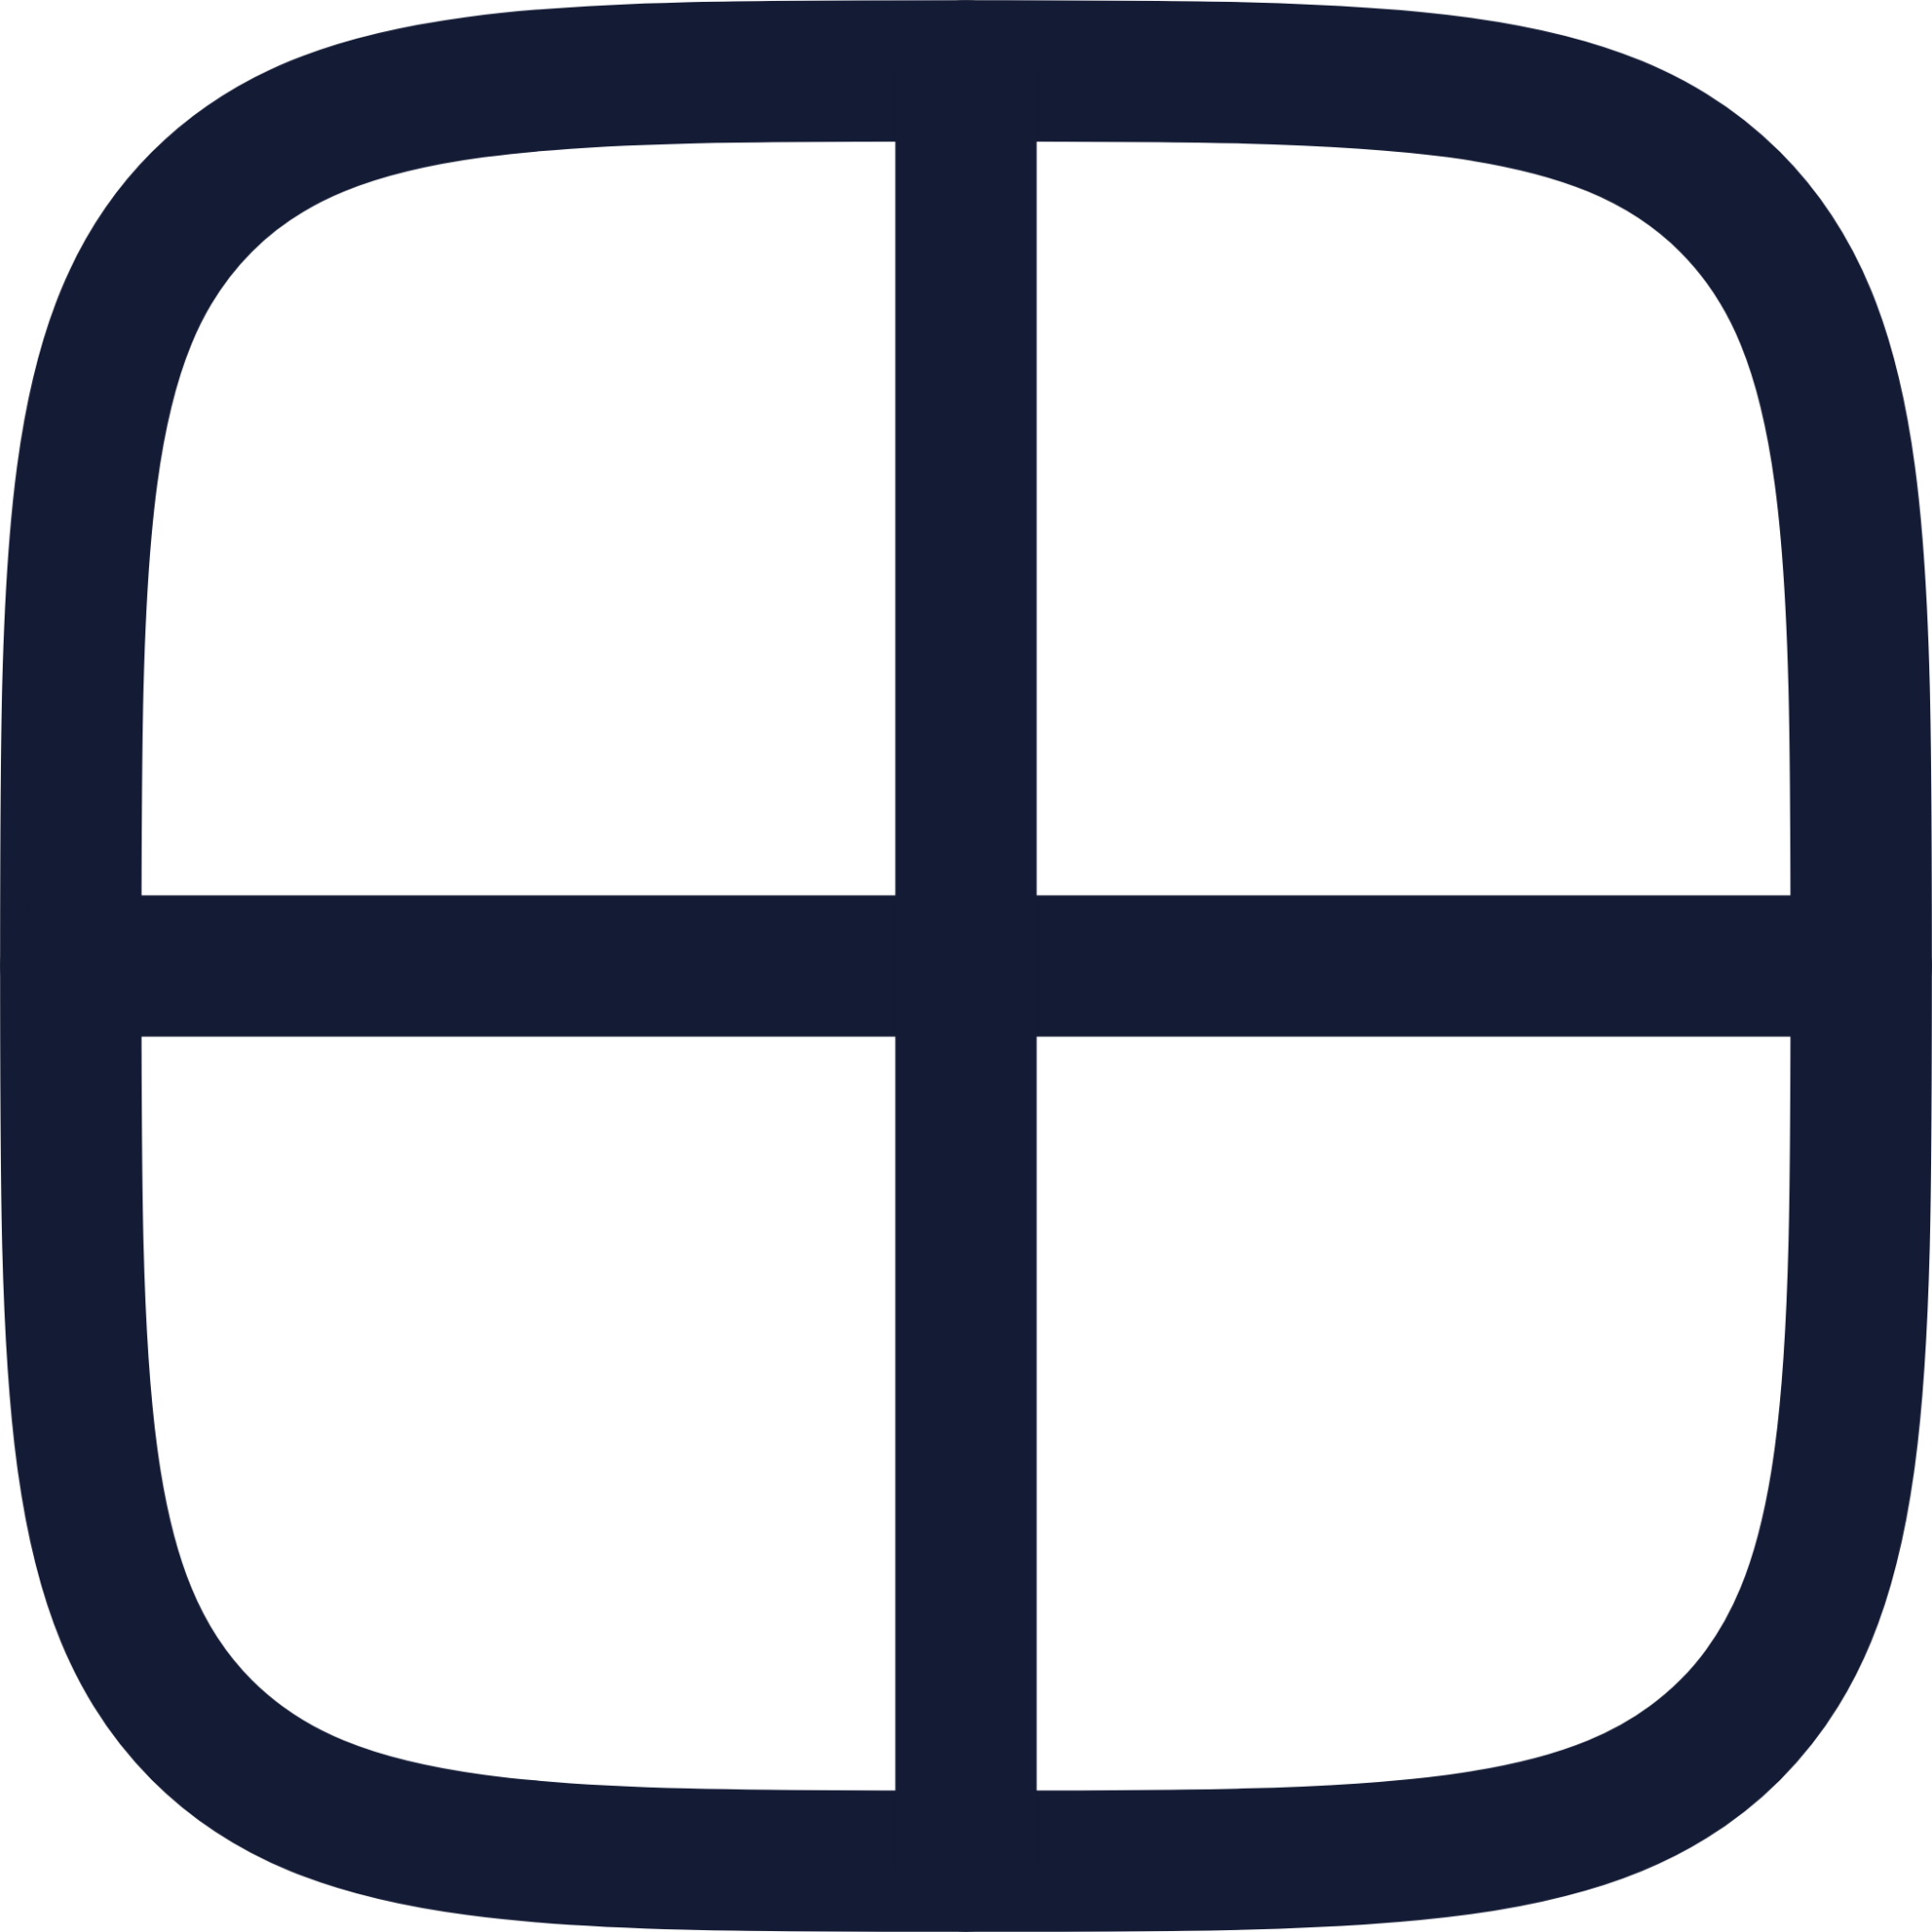 layout grid icon